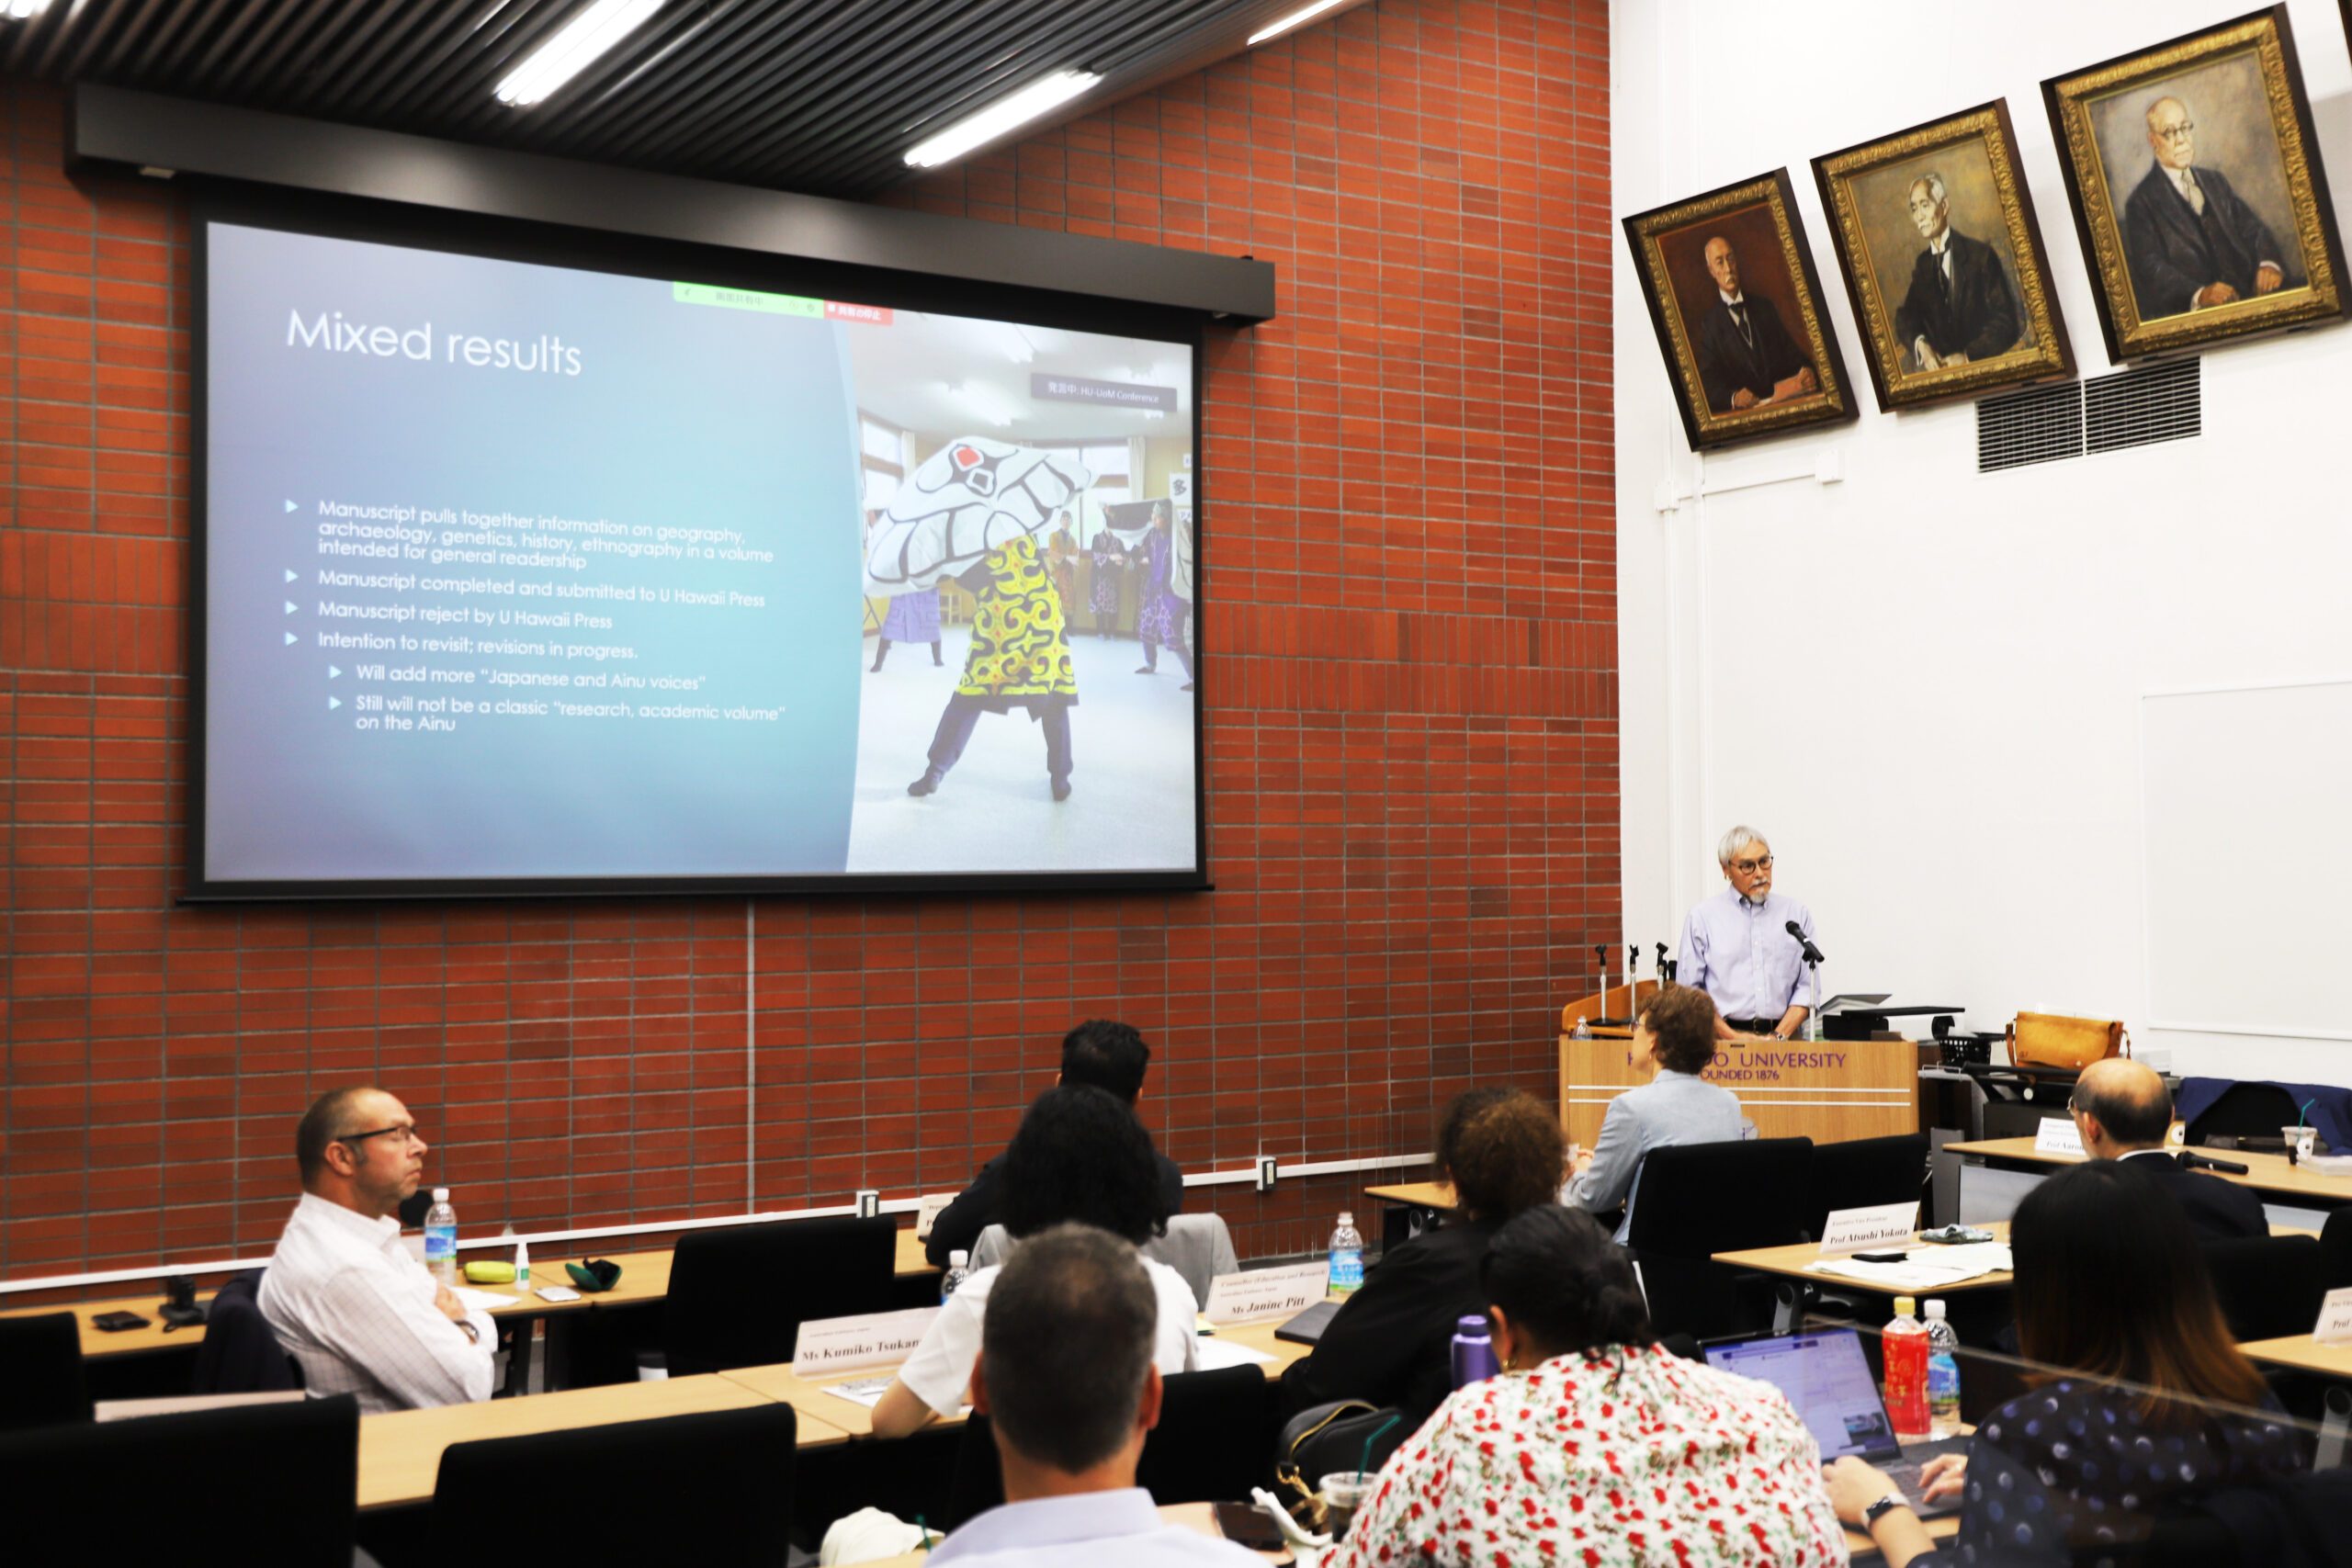 Professor Joe Watkins, Hokkaido University, relating his experiences during his year of research in Hokkaido.